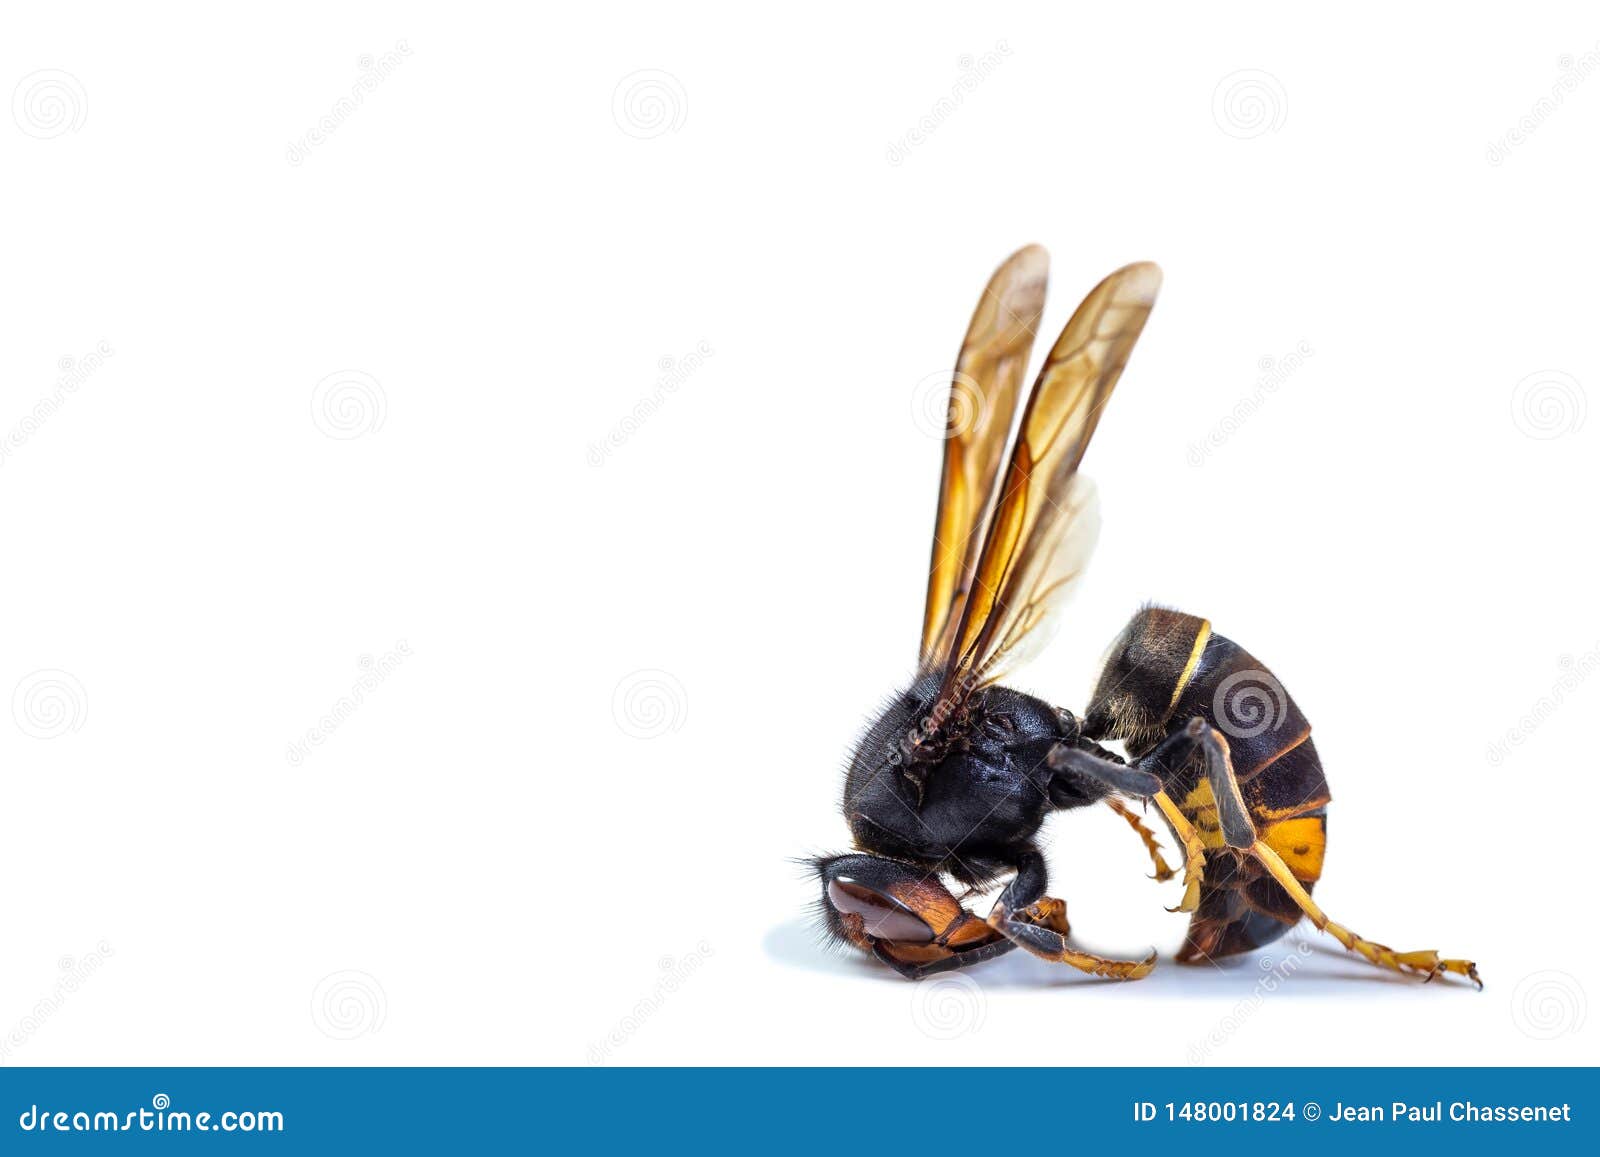 close up of dead asian hornet-poisonous venom animal colony.